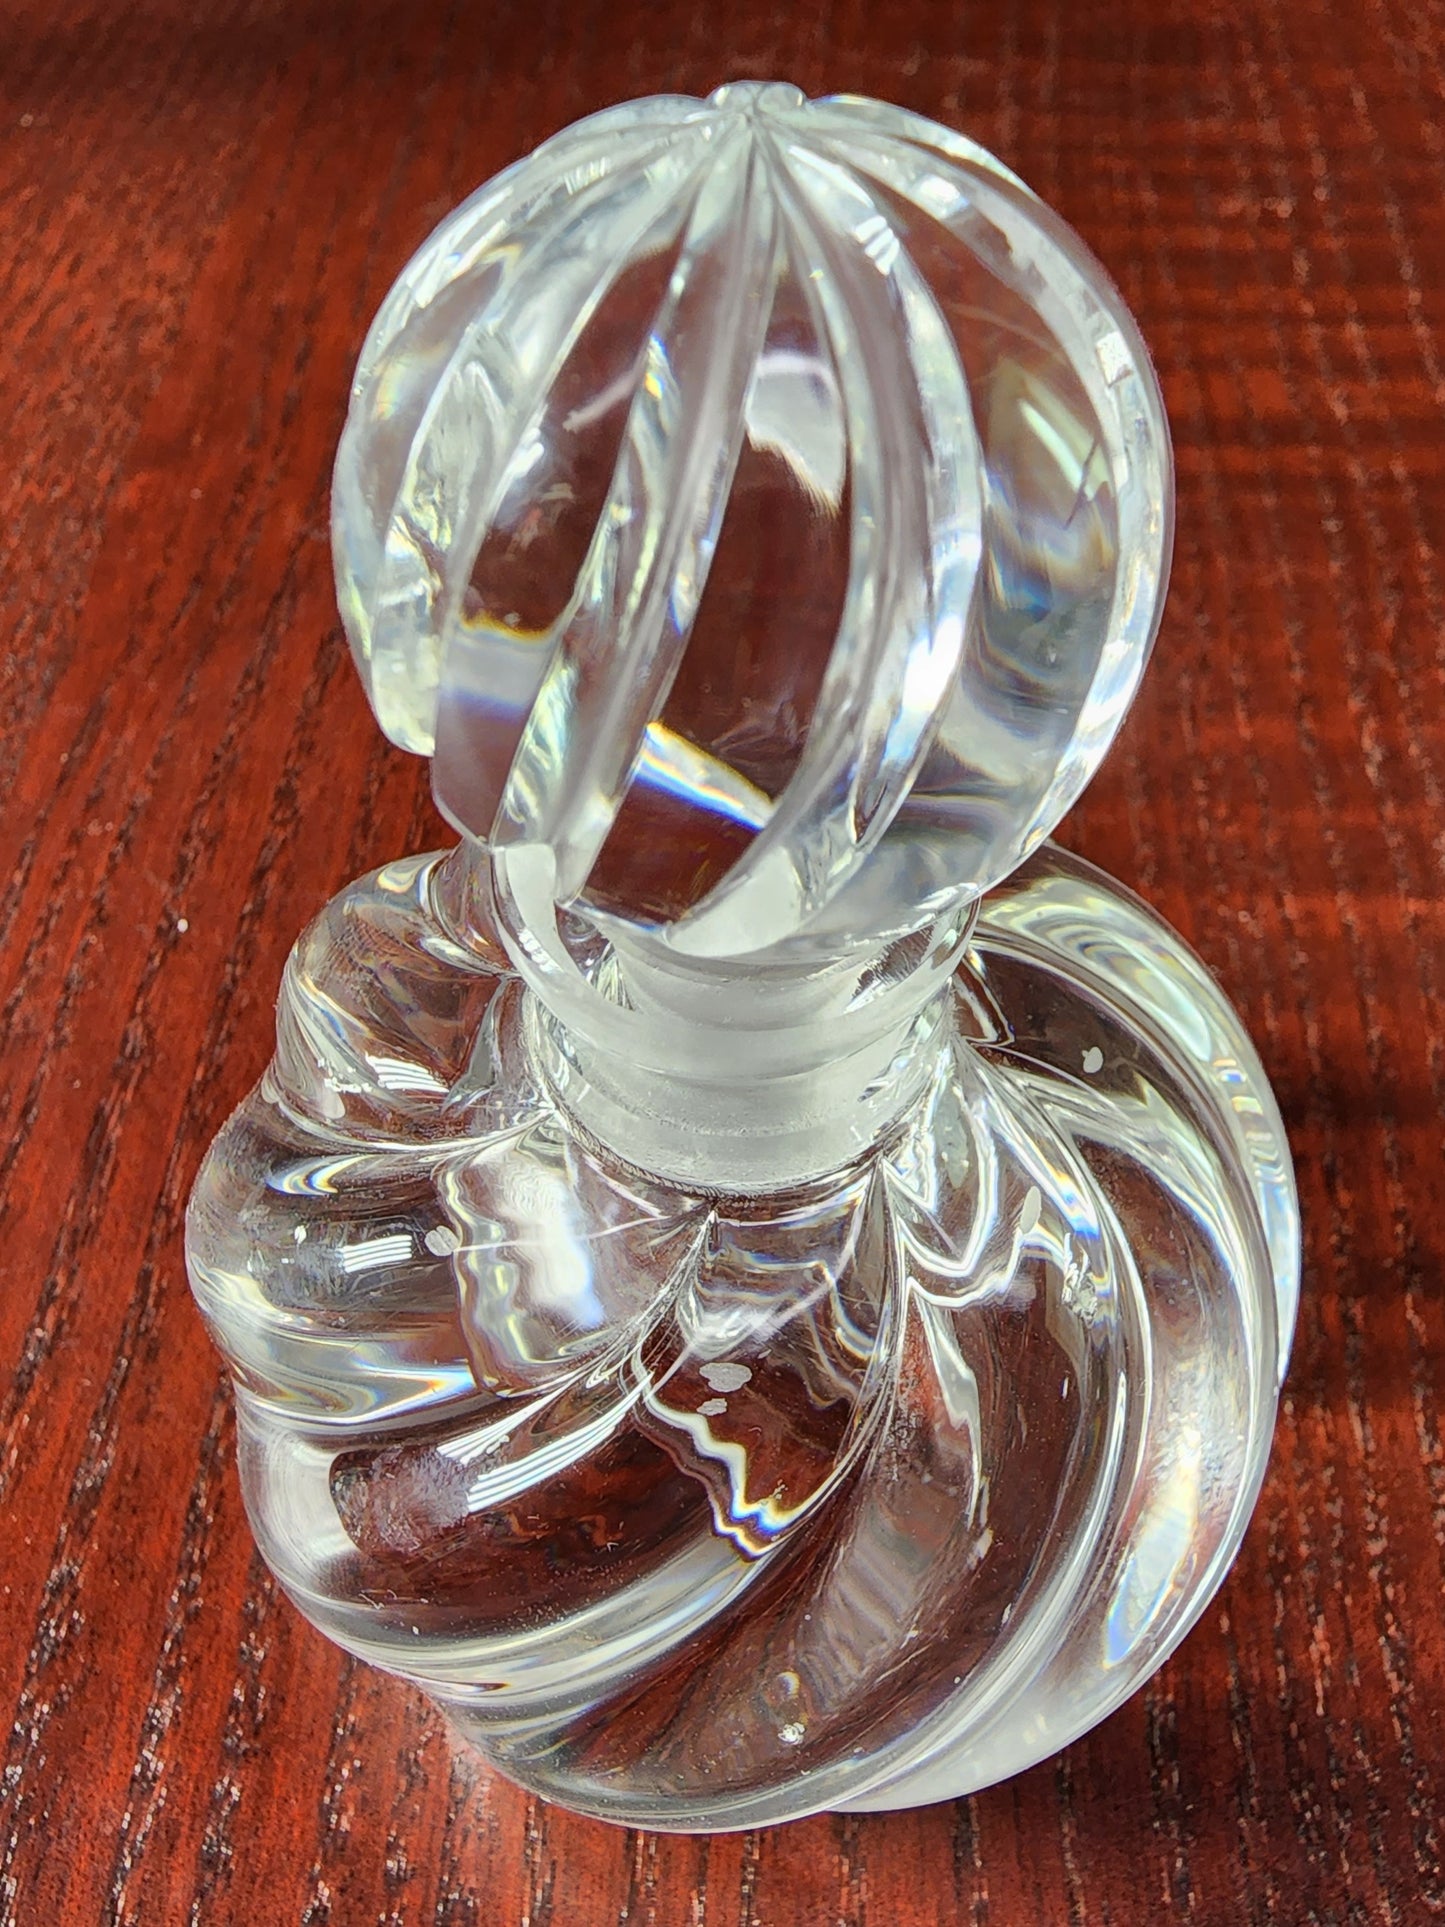 Glass perfume bottle swirl